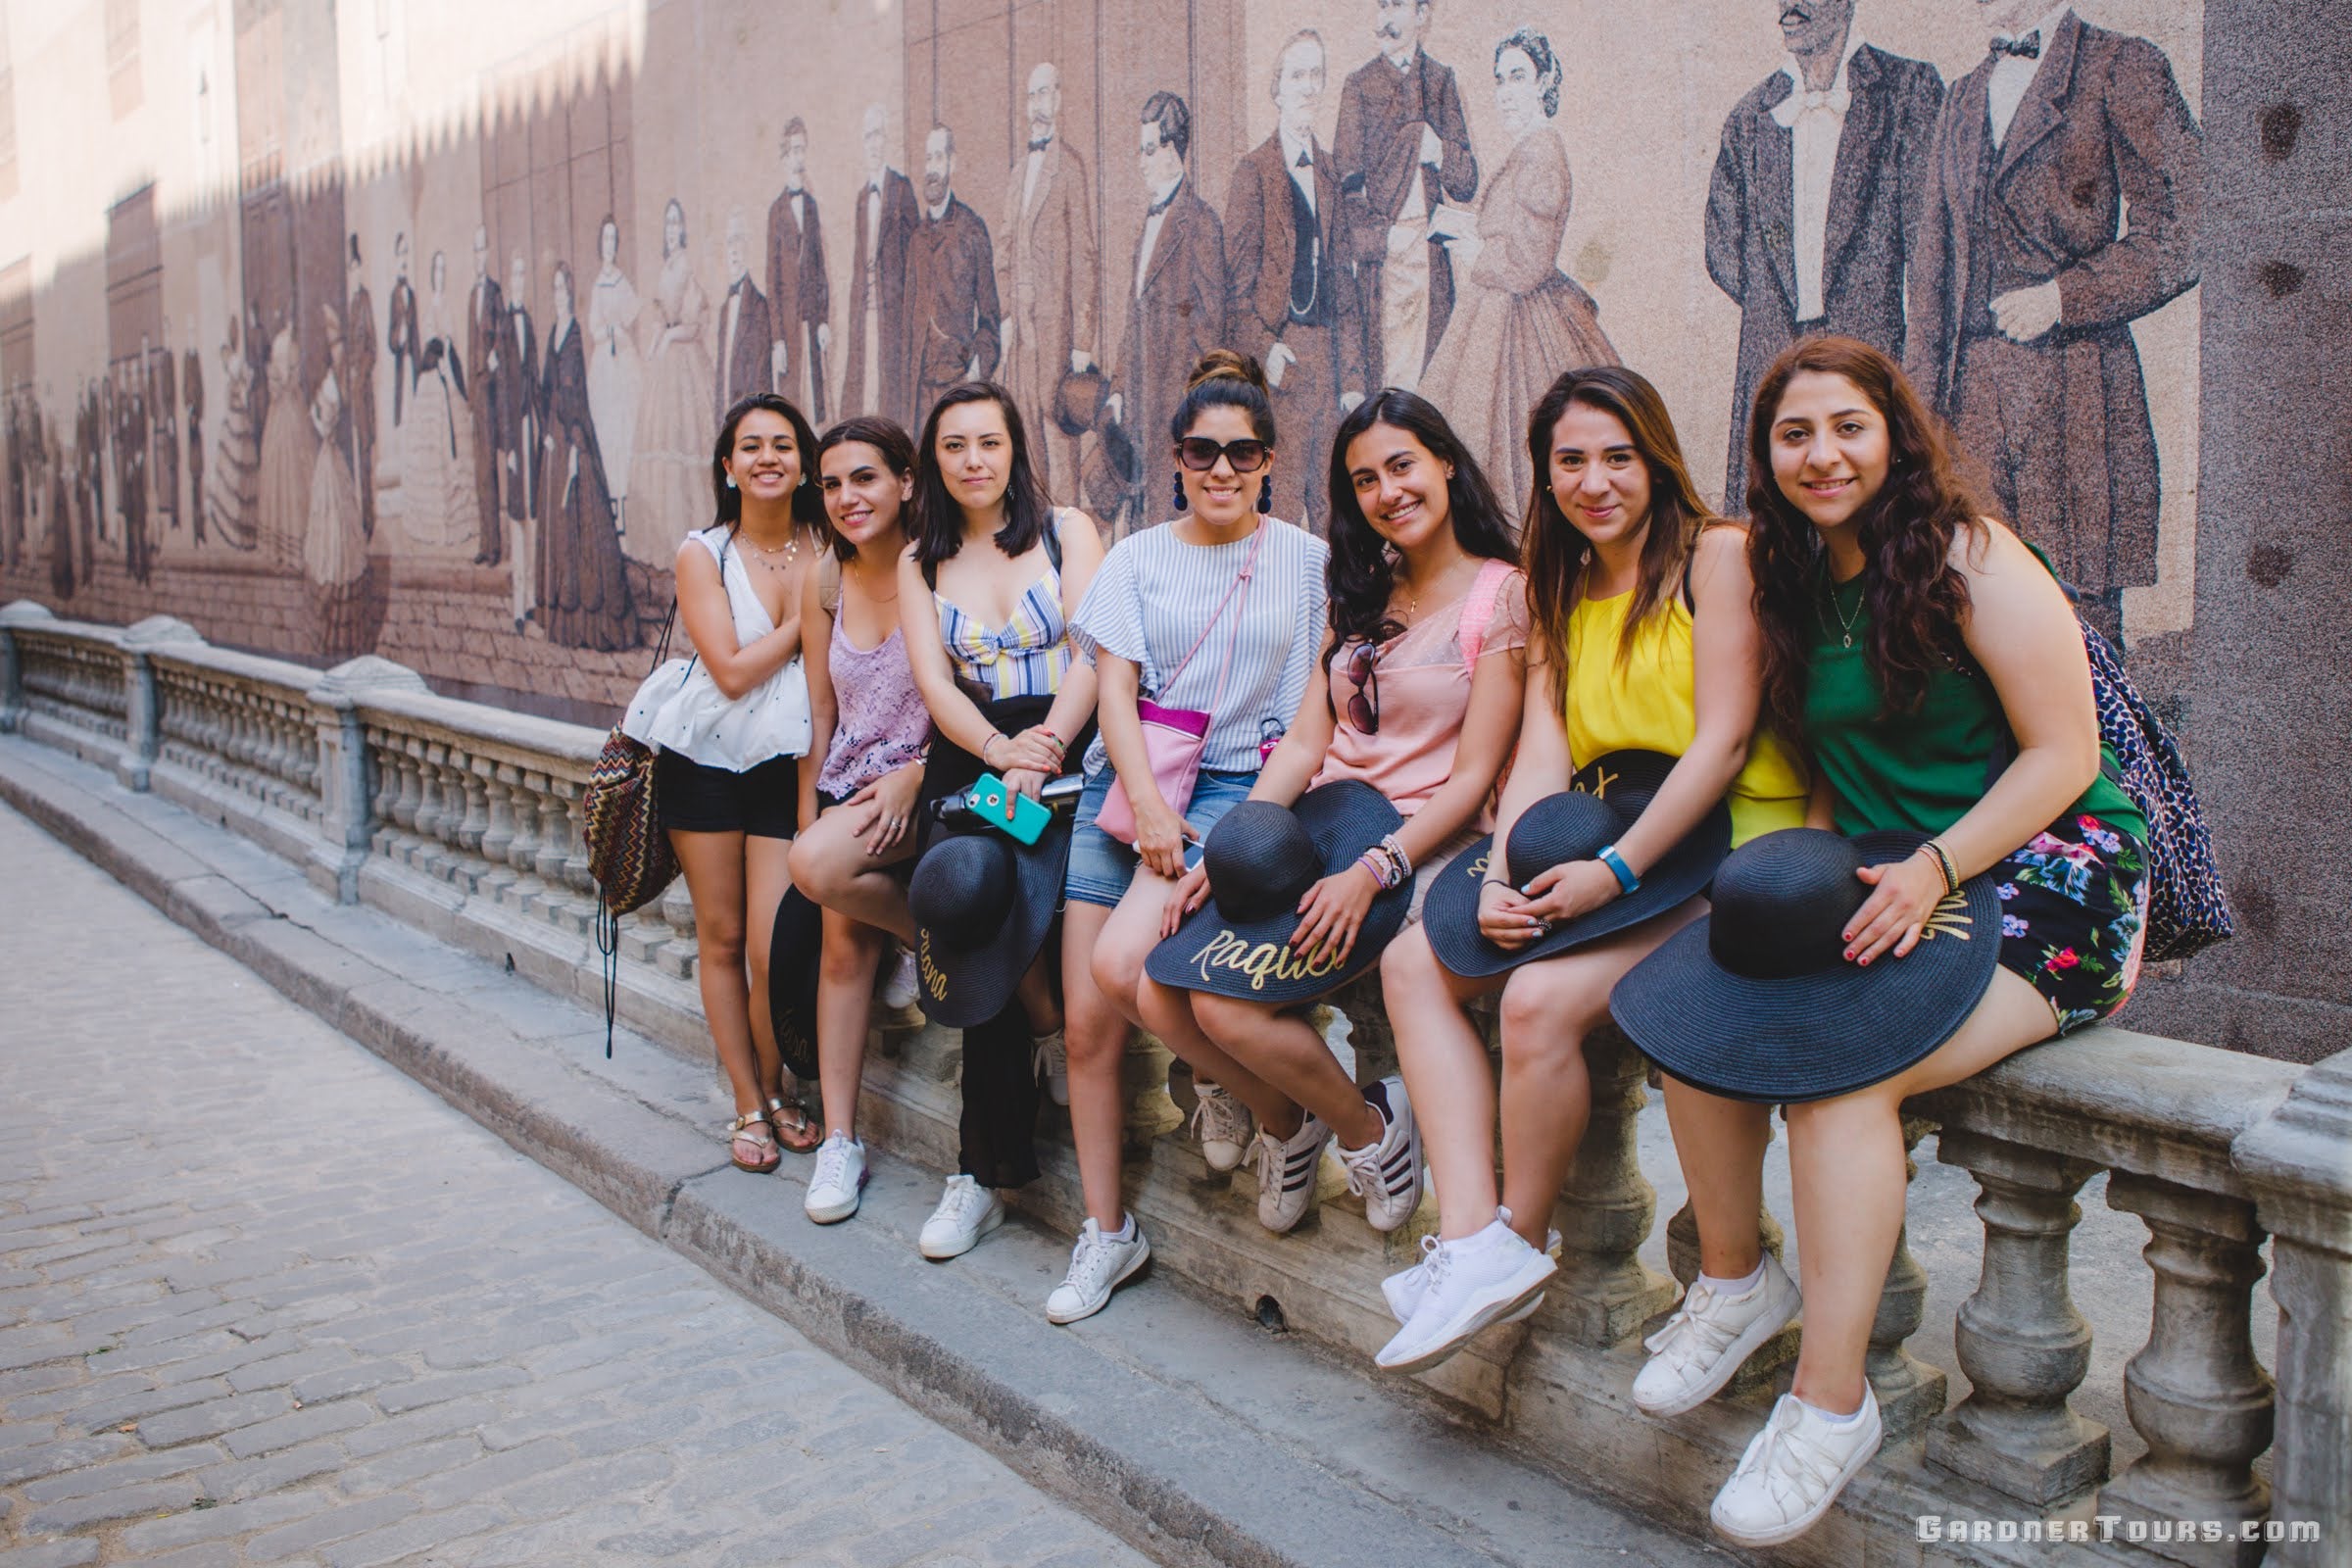 Group of Ladies in front of Mural in Old Havana, Cuba